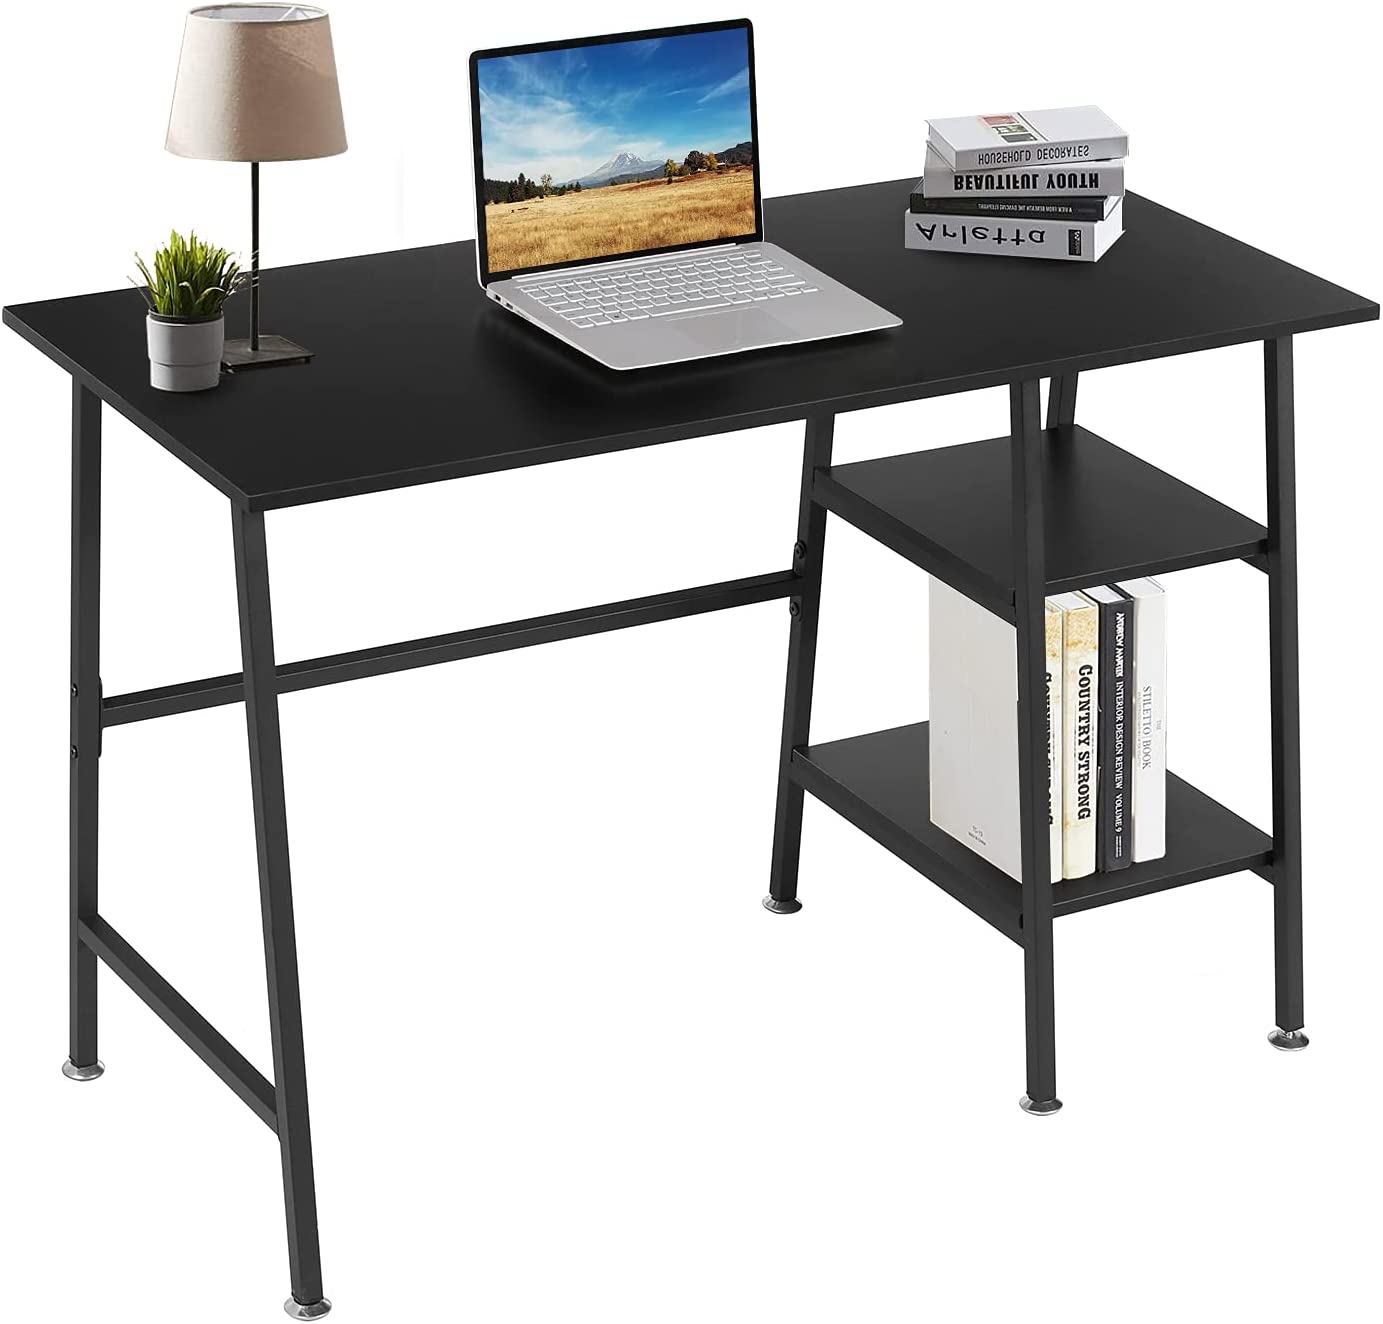 VECELO Computer Desk 47 L Shaped Heavy Duty Home Office Table